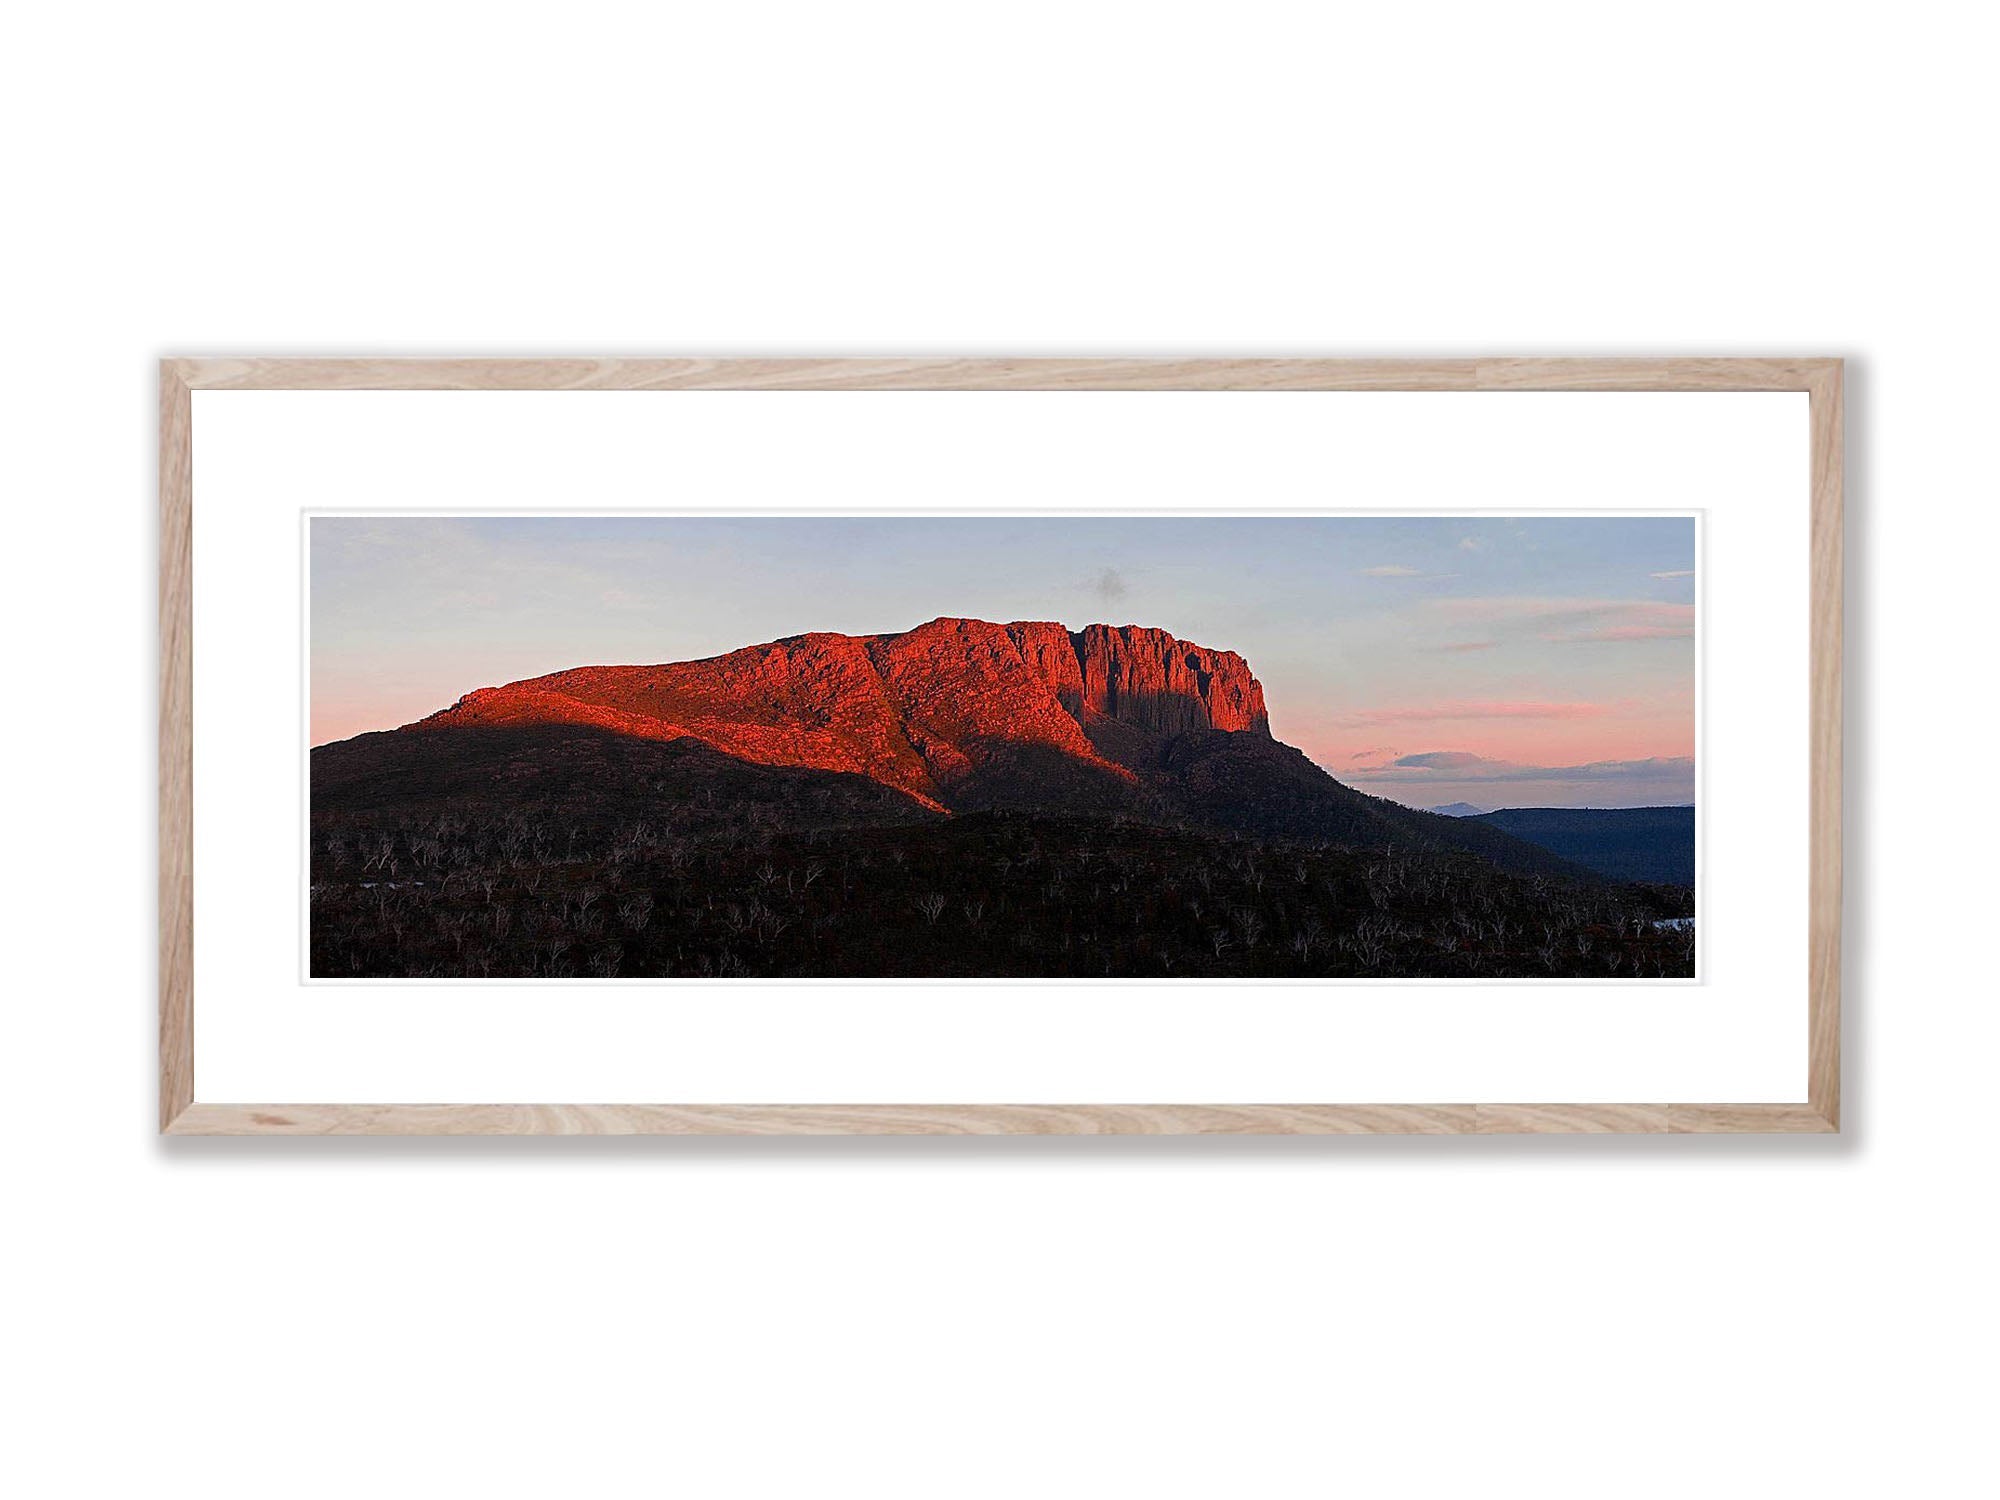 Walled Mountain, Overland Track, Cradle Mountain, Tasmania